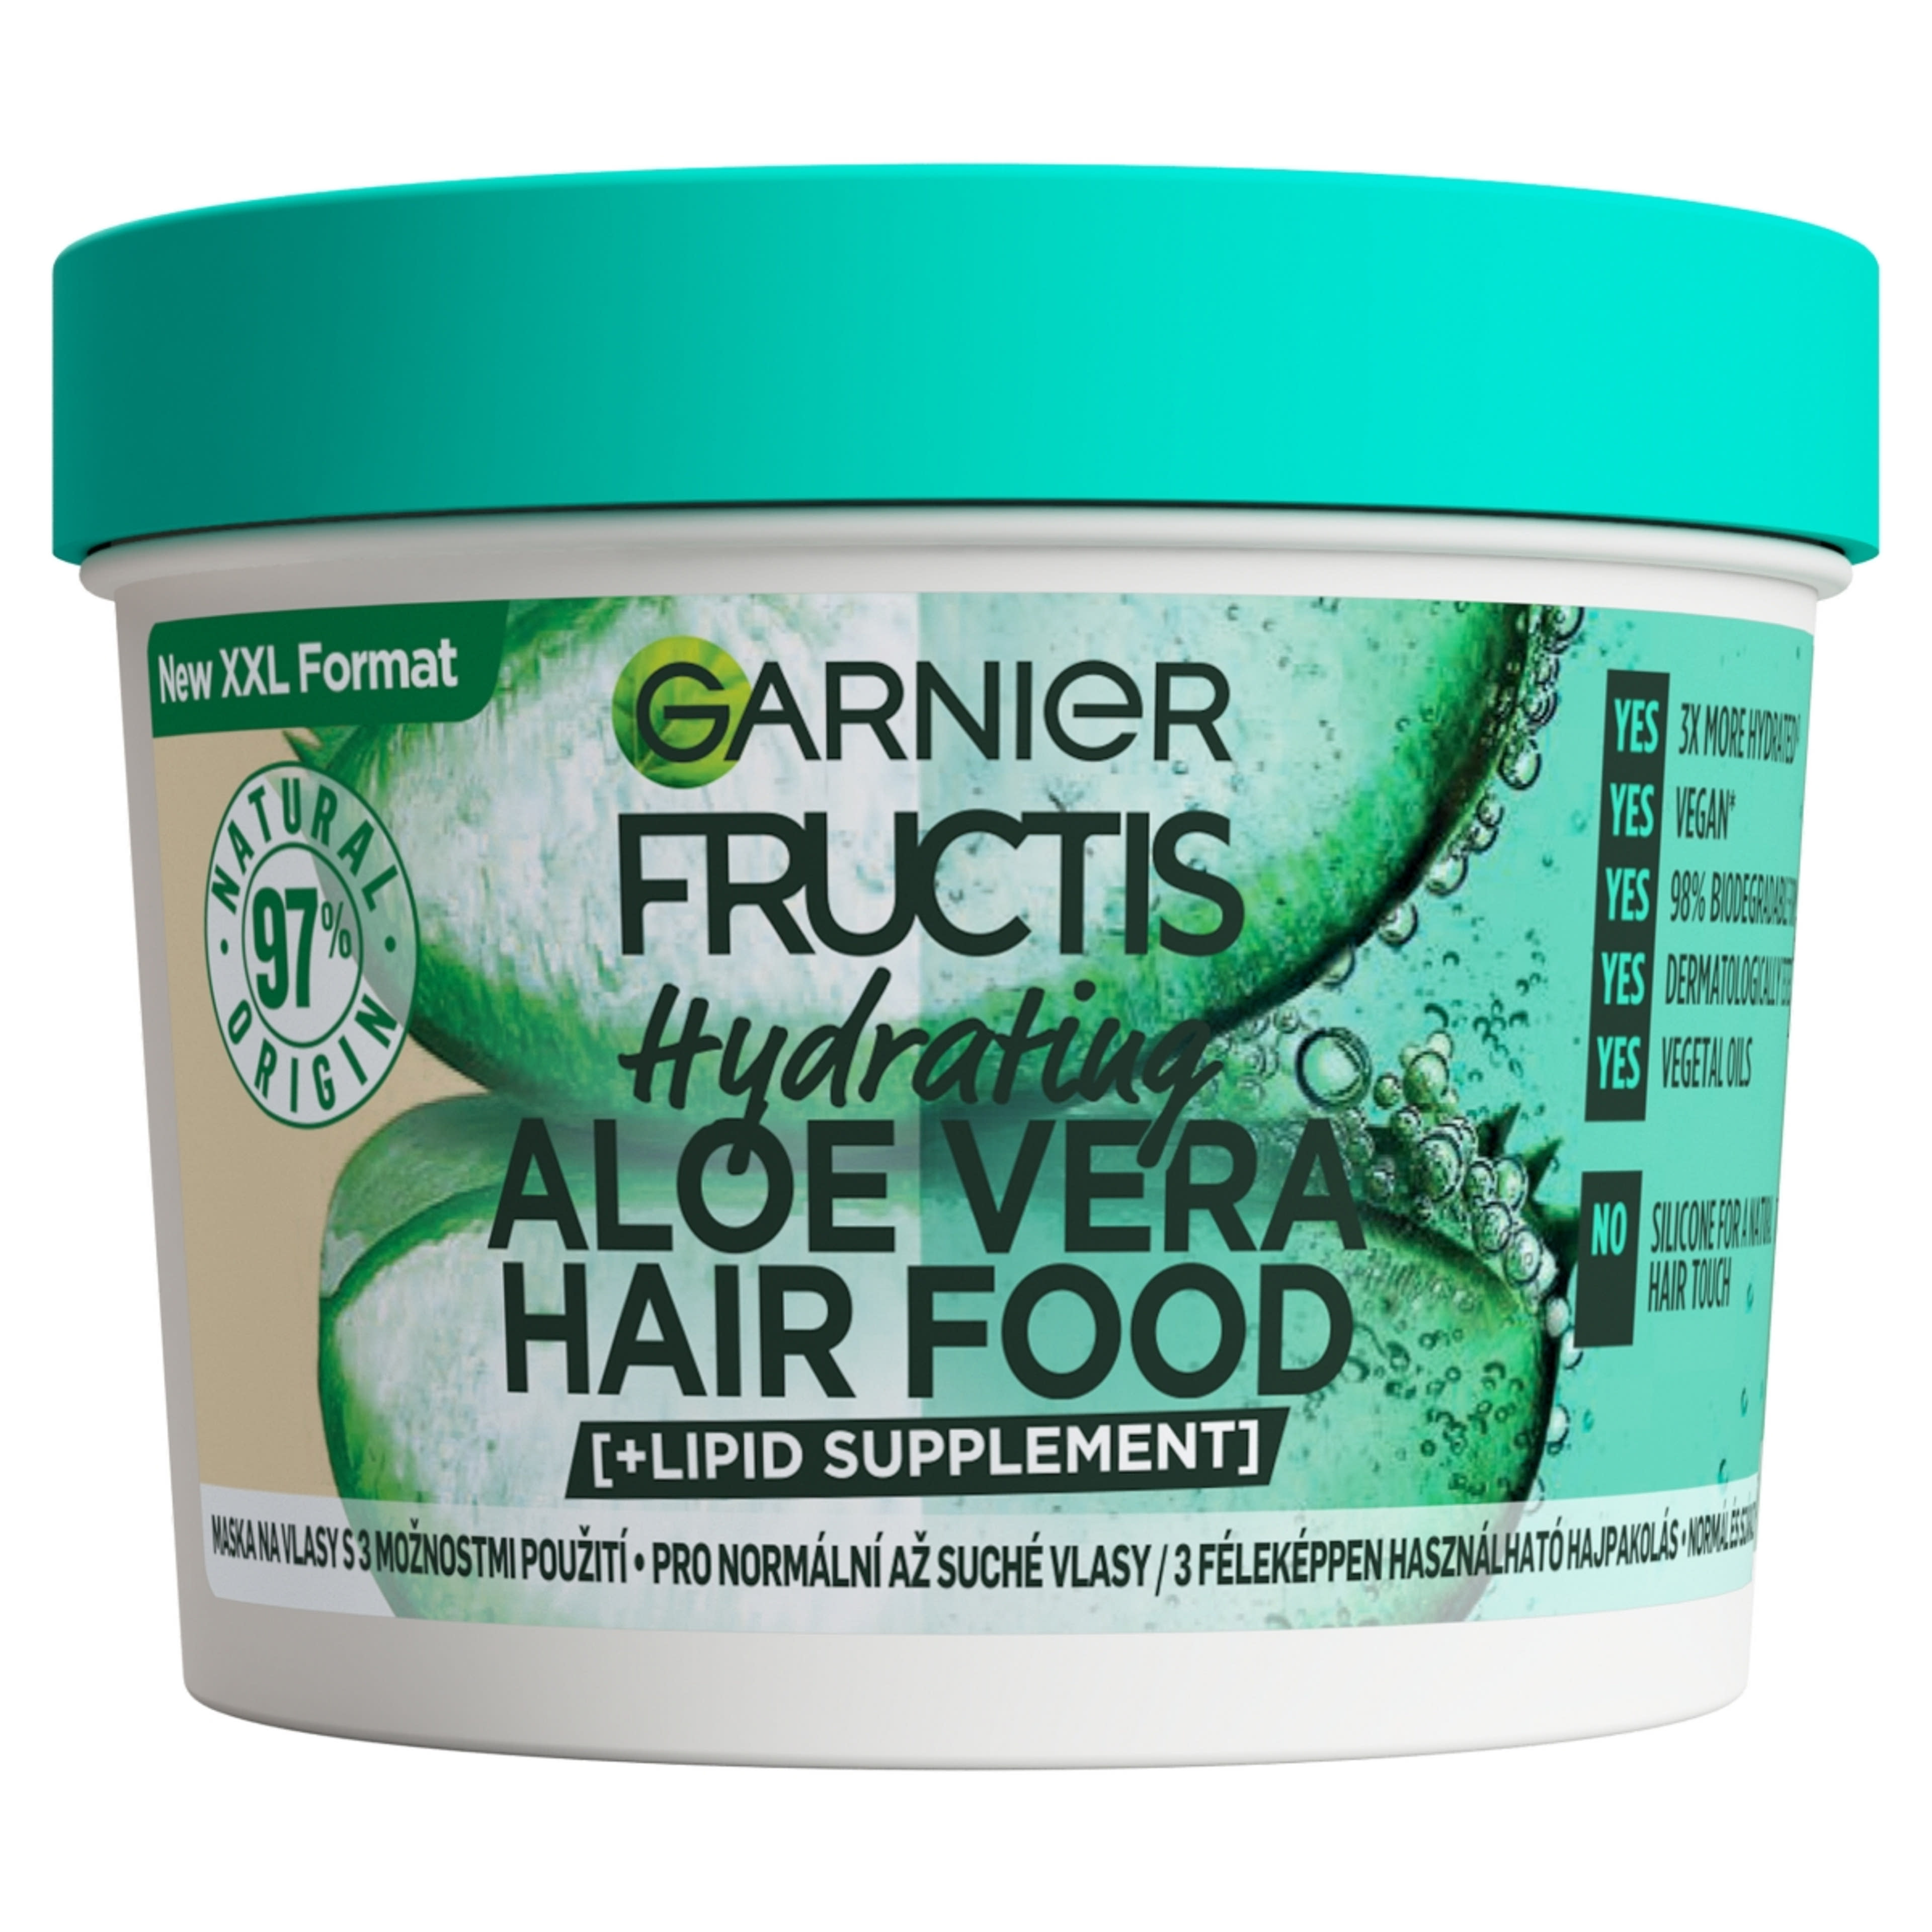 Garnier Fructis Hair Food Aloe Vera hajpakolás - 400 ml